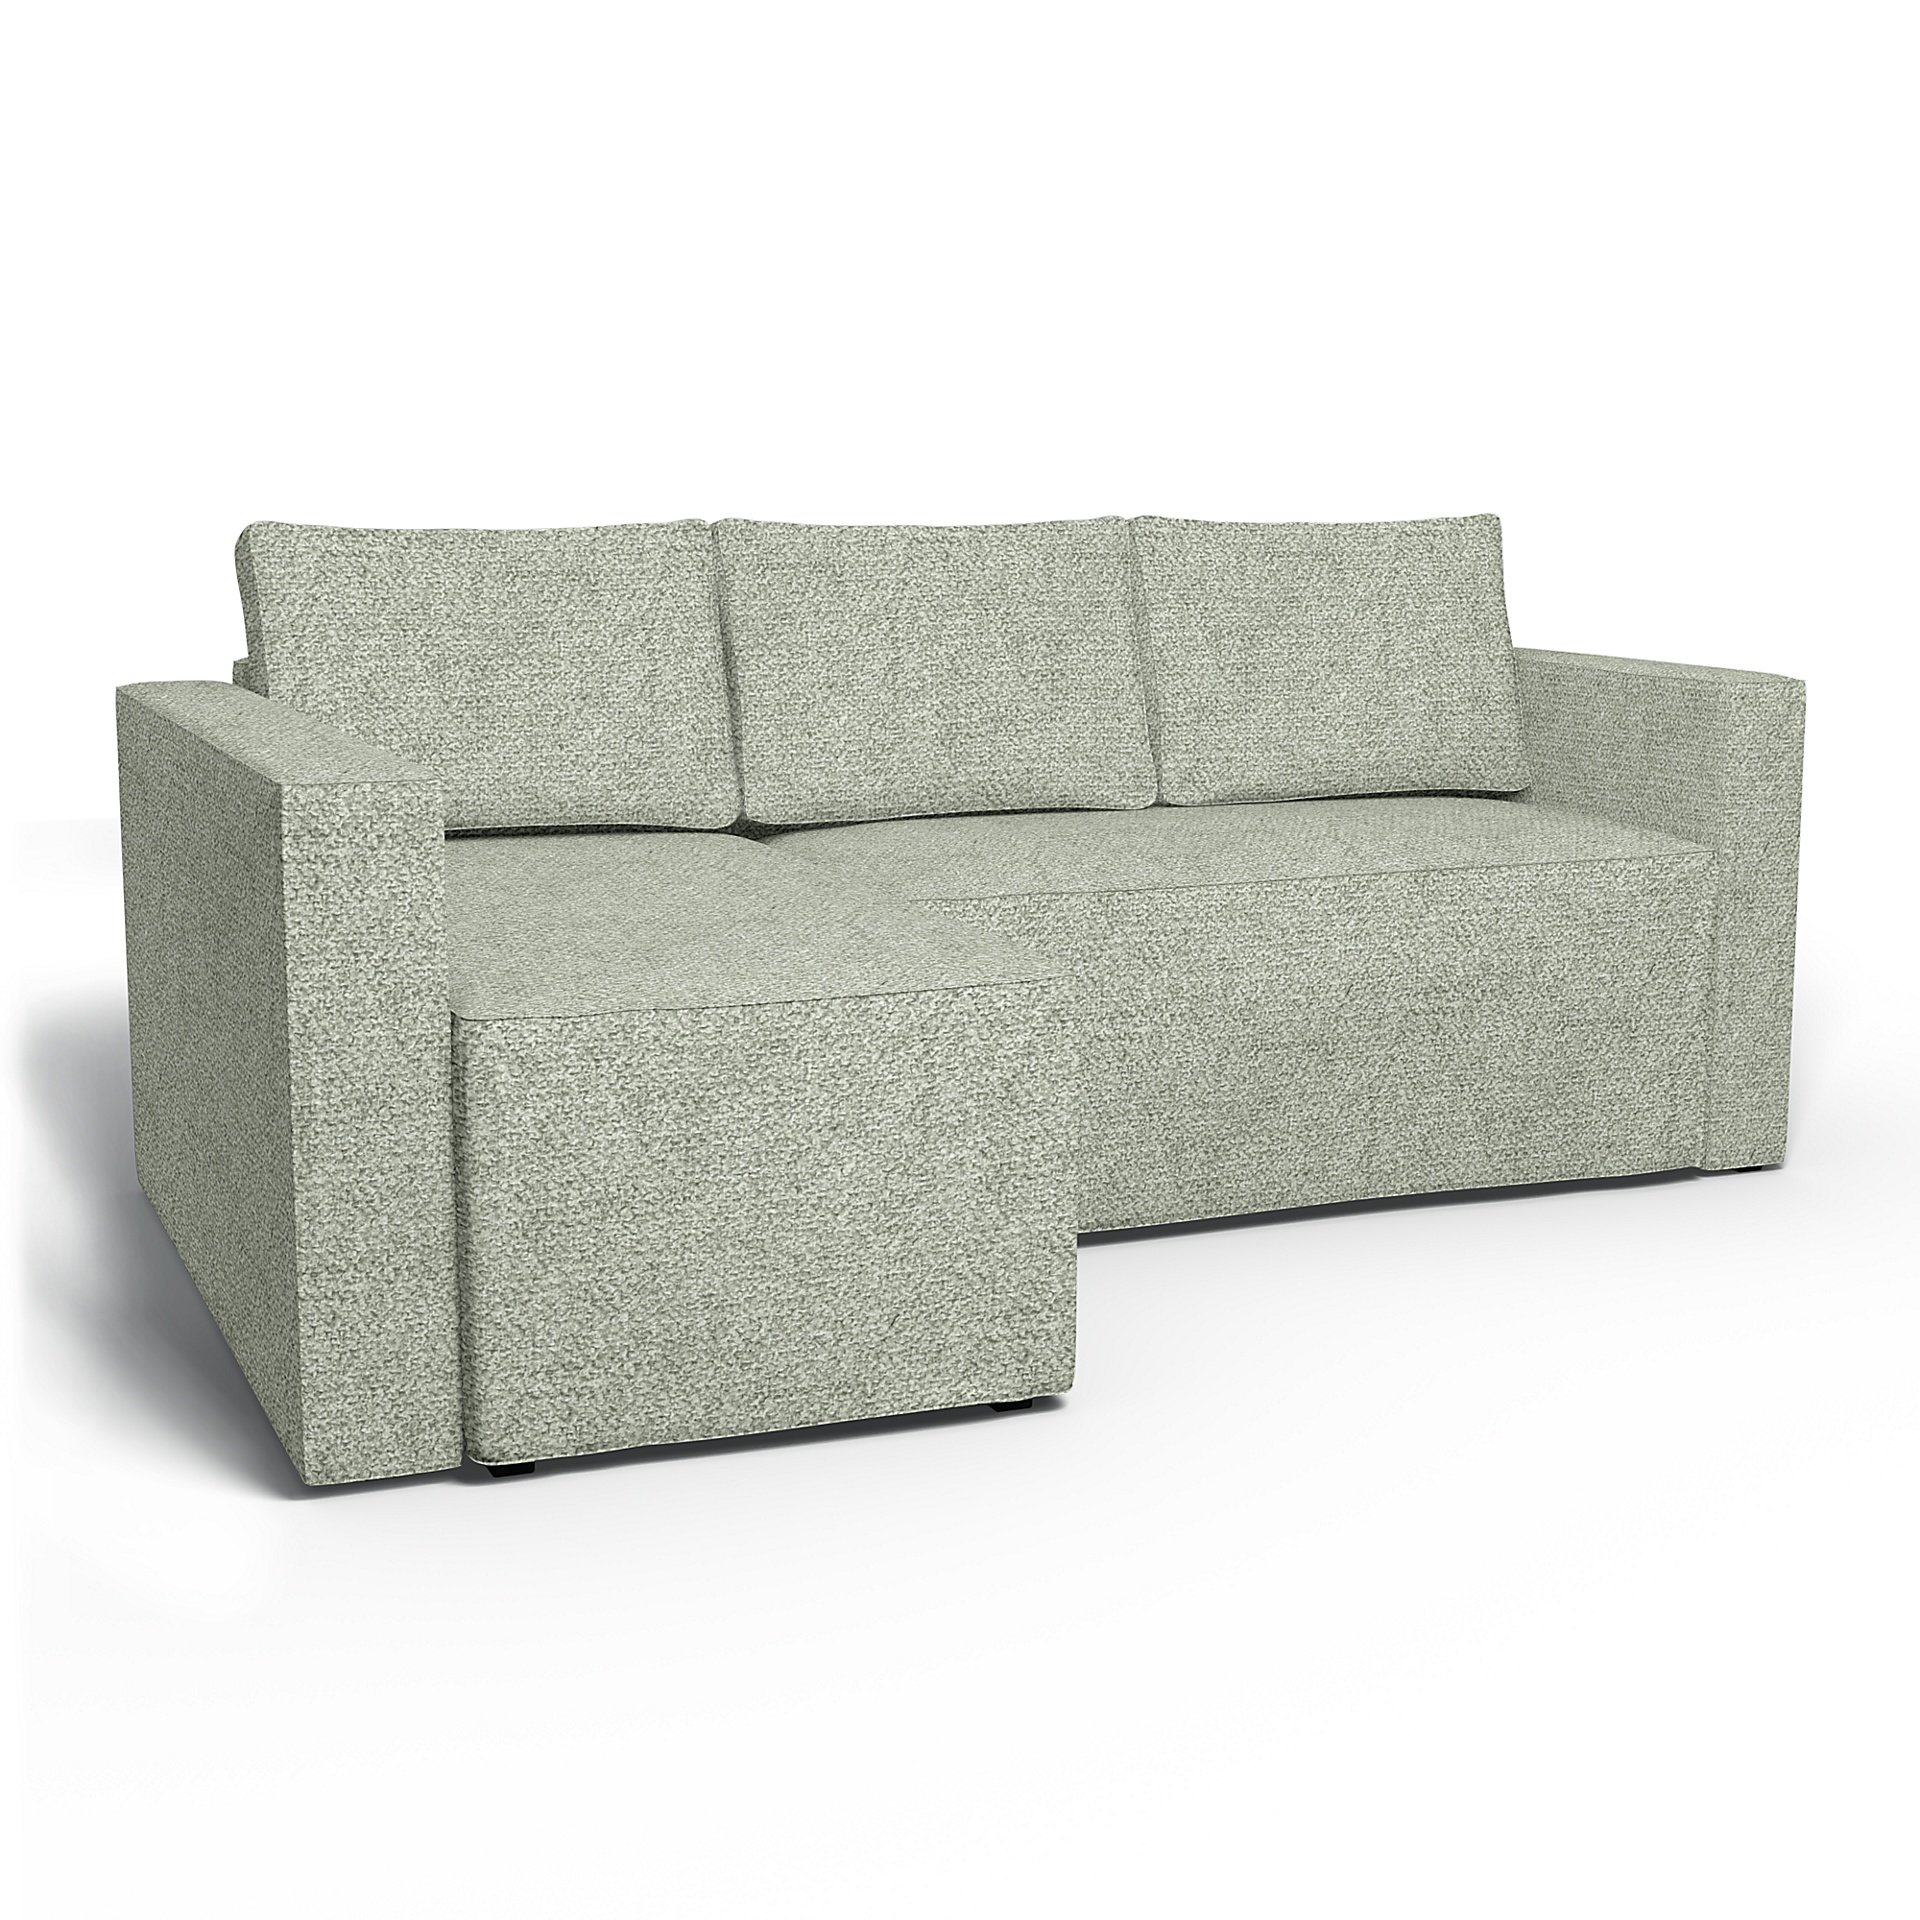 IKEA - Manstad Sofa Bed with Left Chaise Cover, Pistachio, Boucle & Texture - Bemz